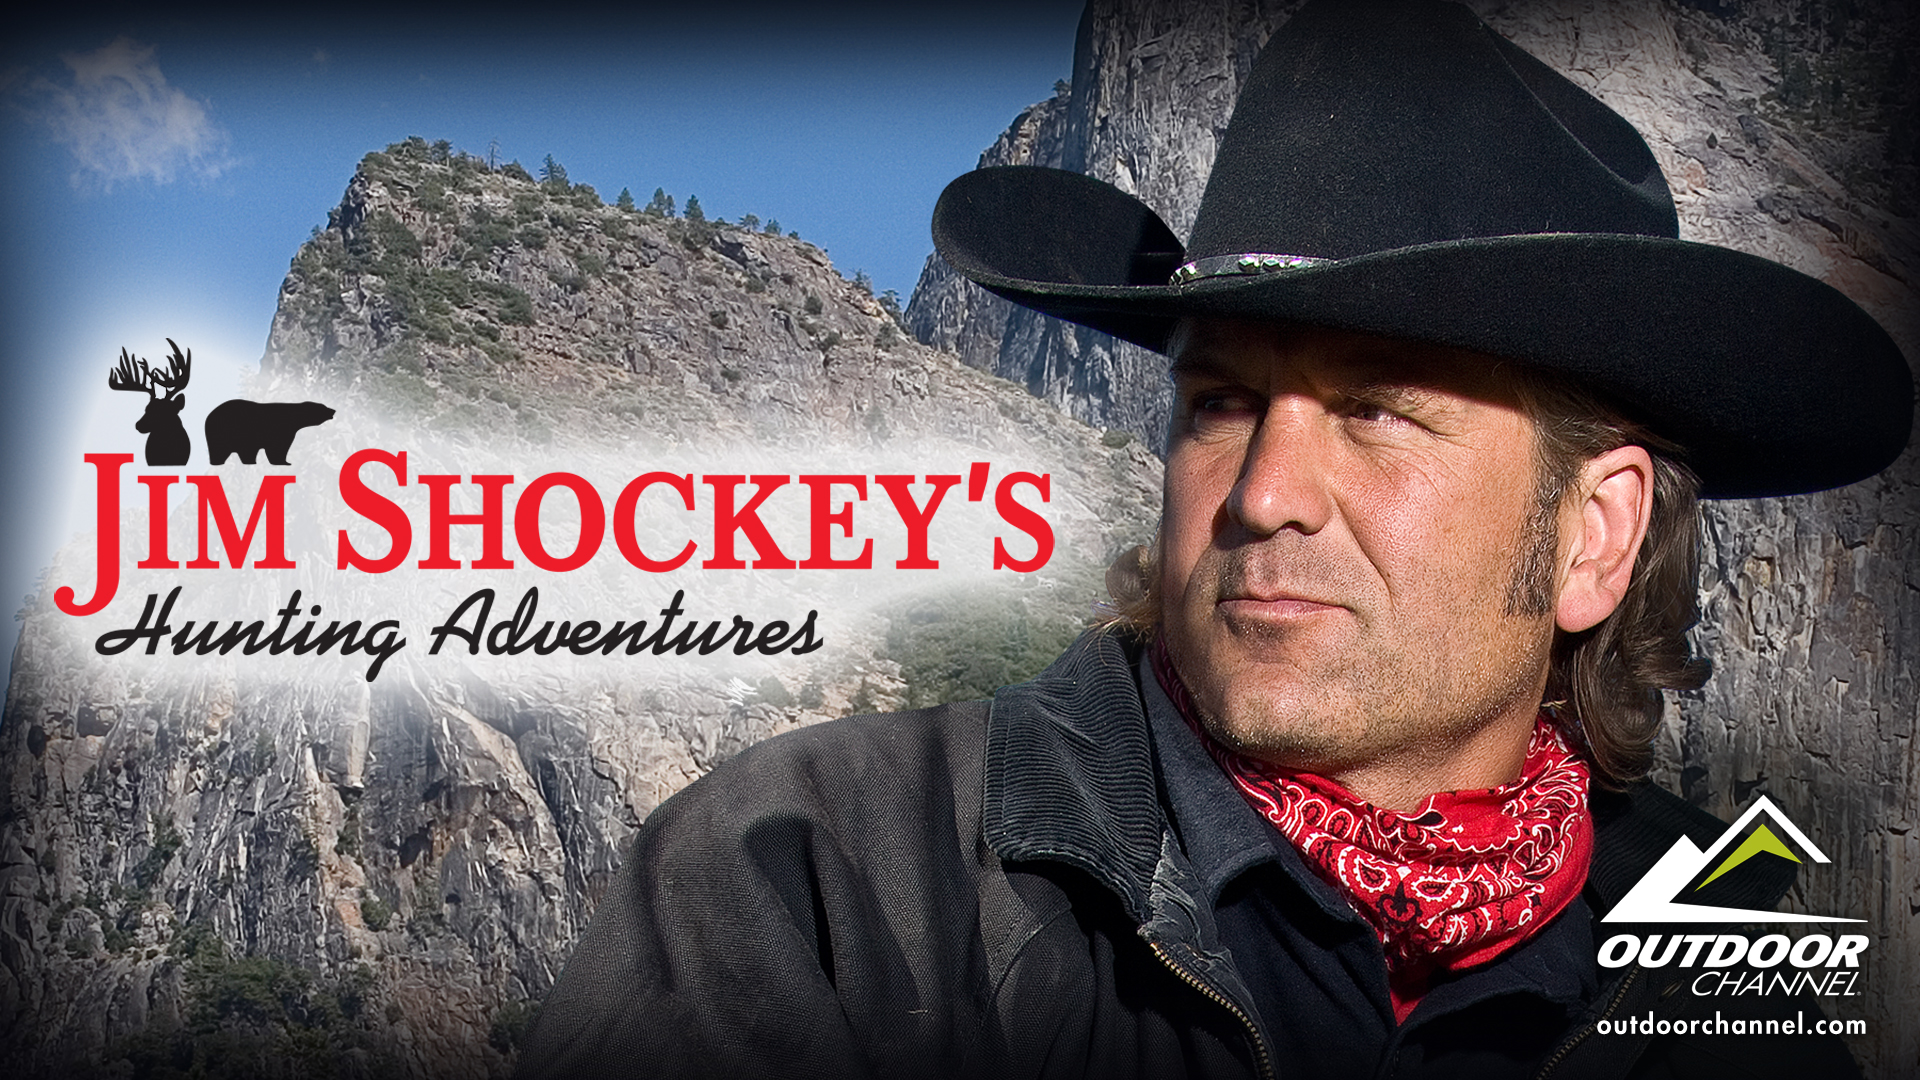 Jim Shockey's Hunting Adventures